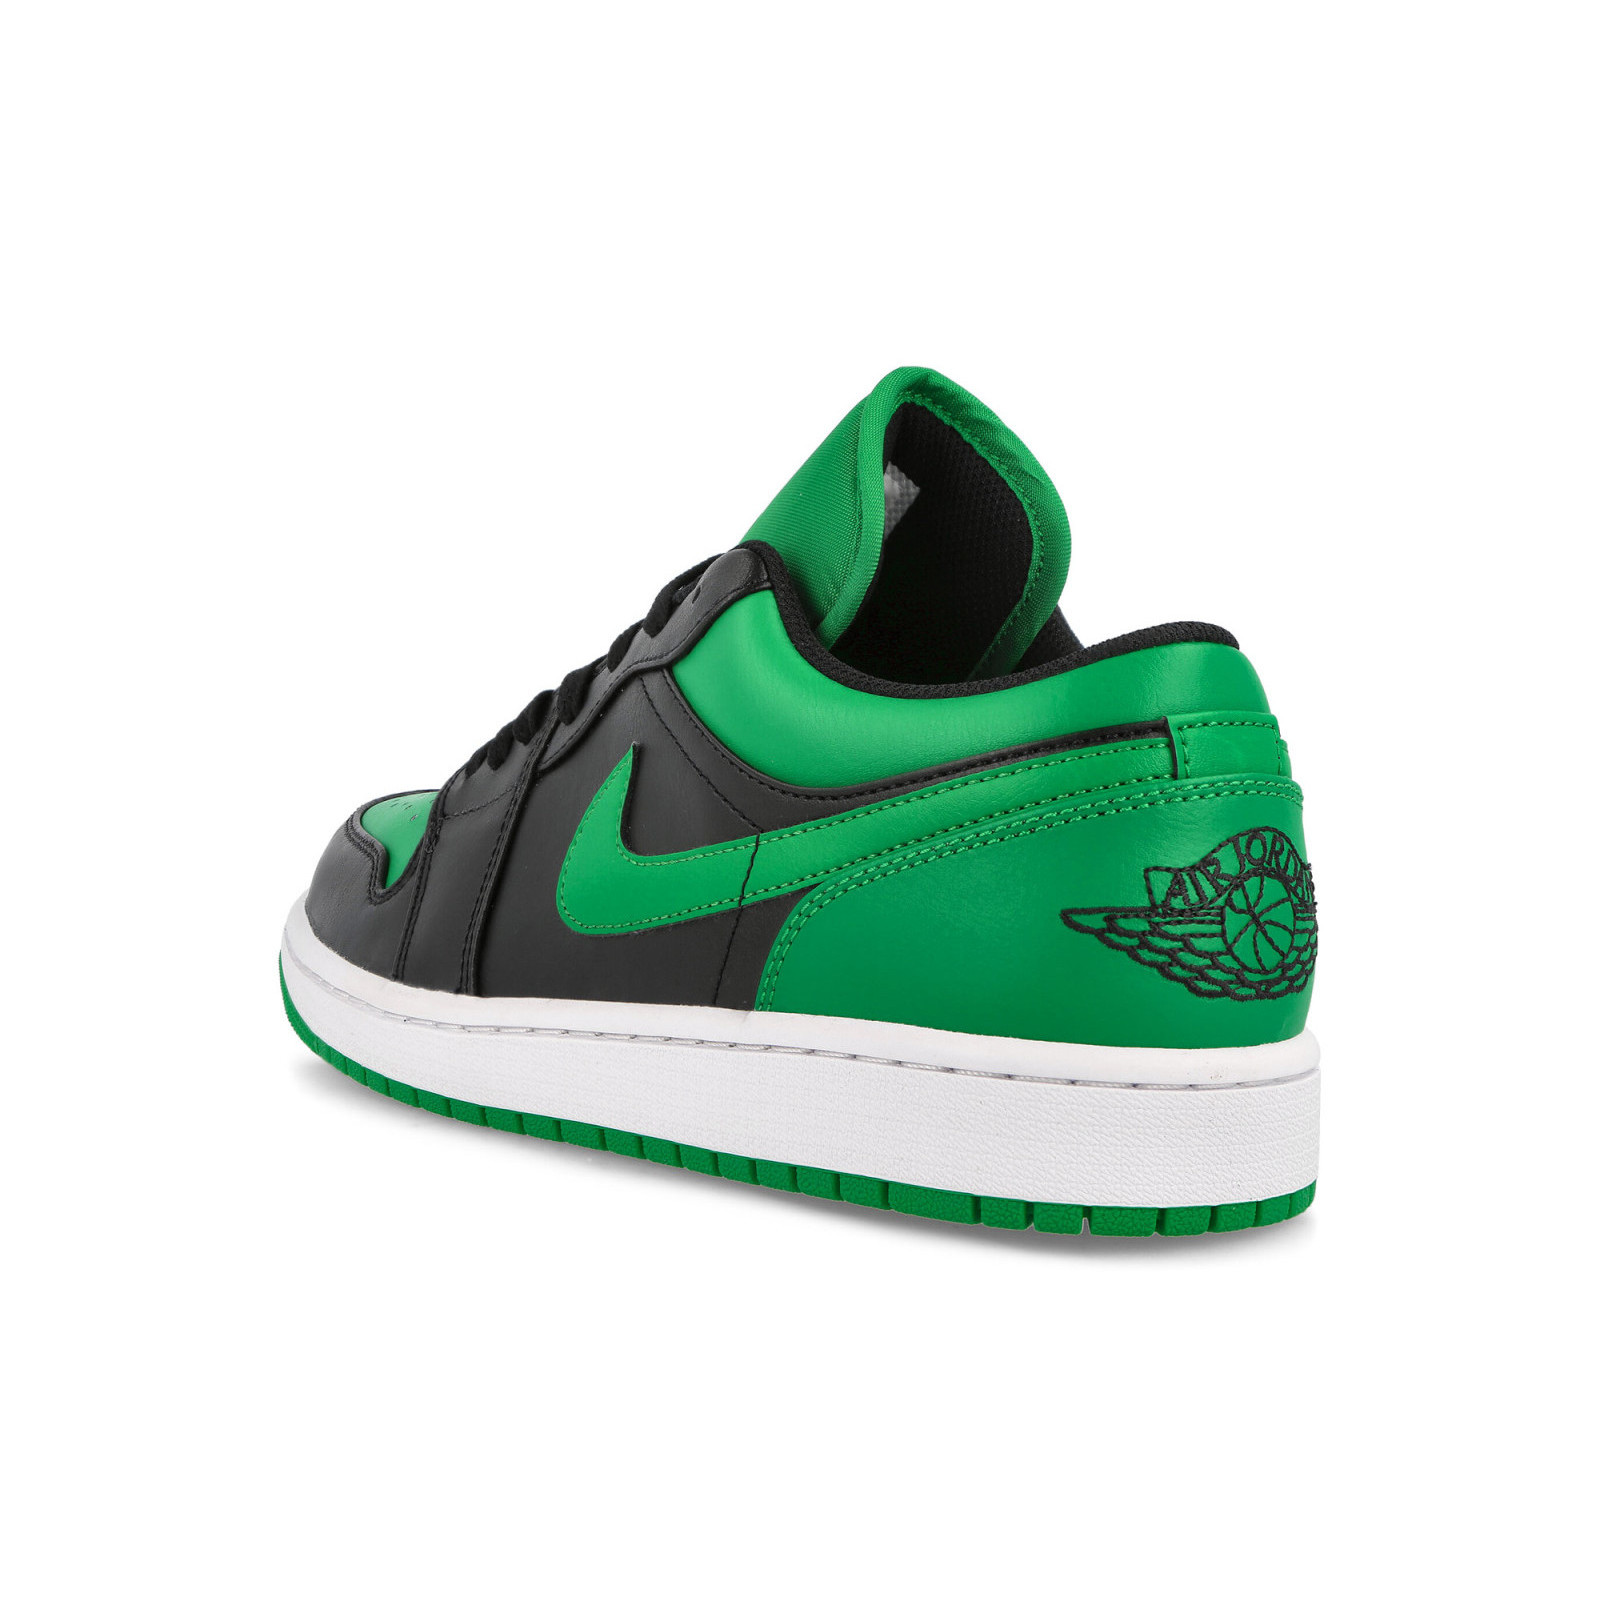 Air Jordan 1 Low
« Lucky Green »